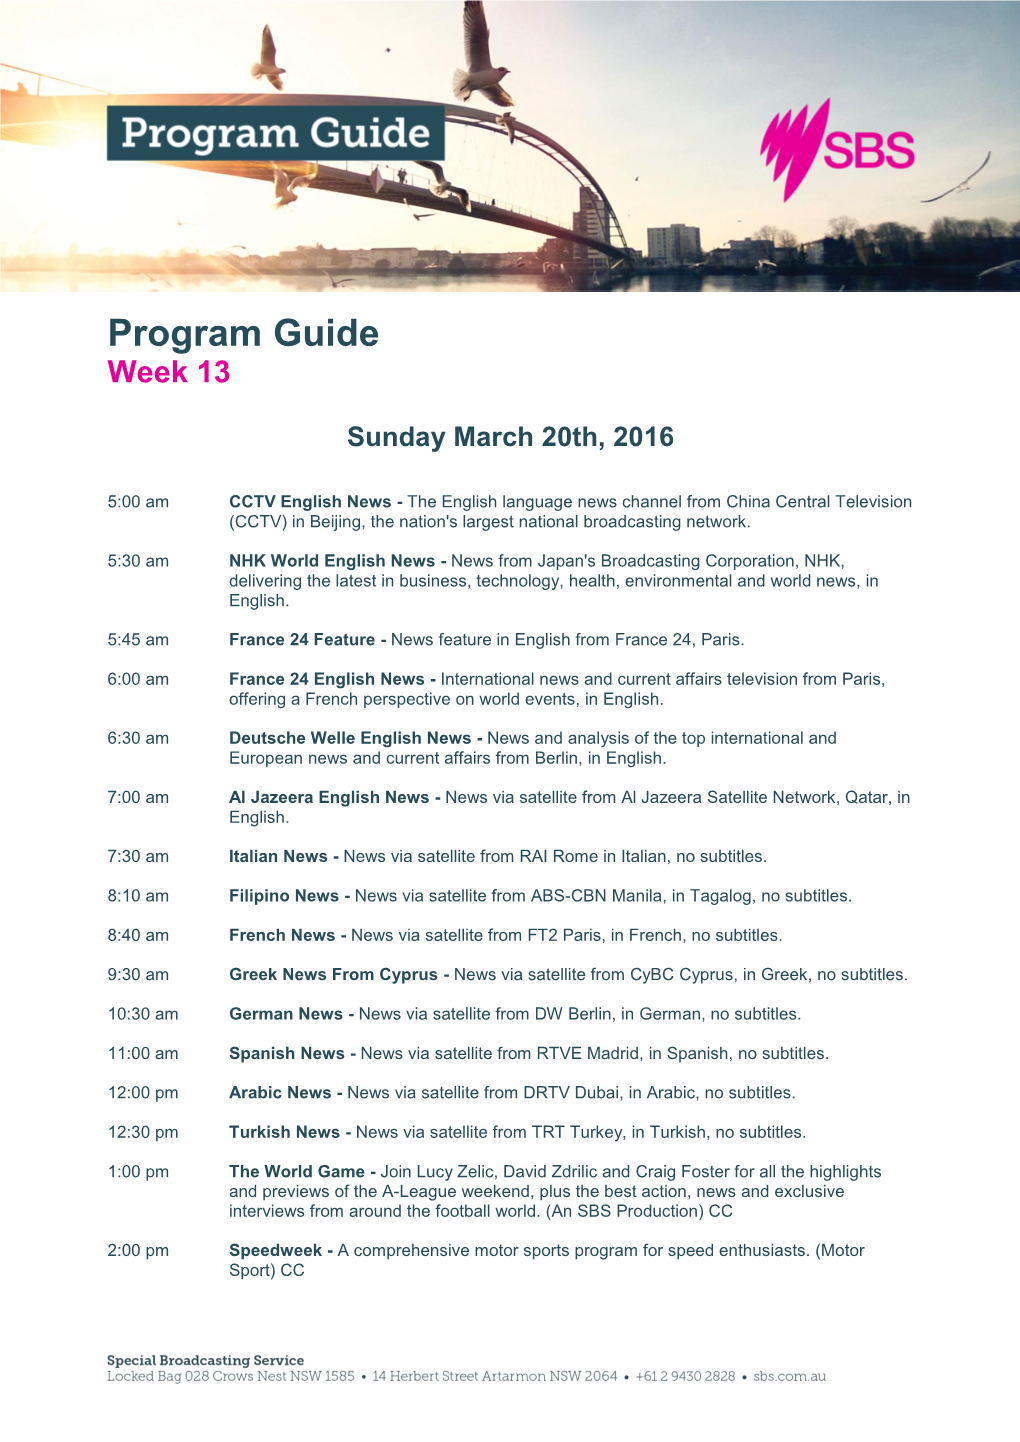 Program Guide Week 13